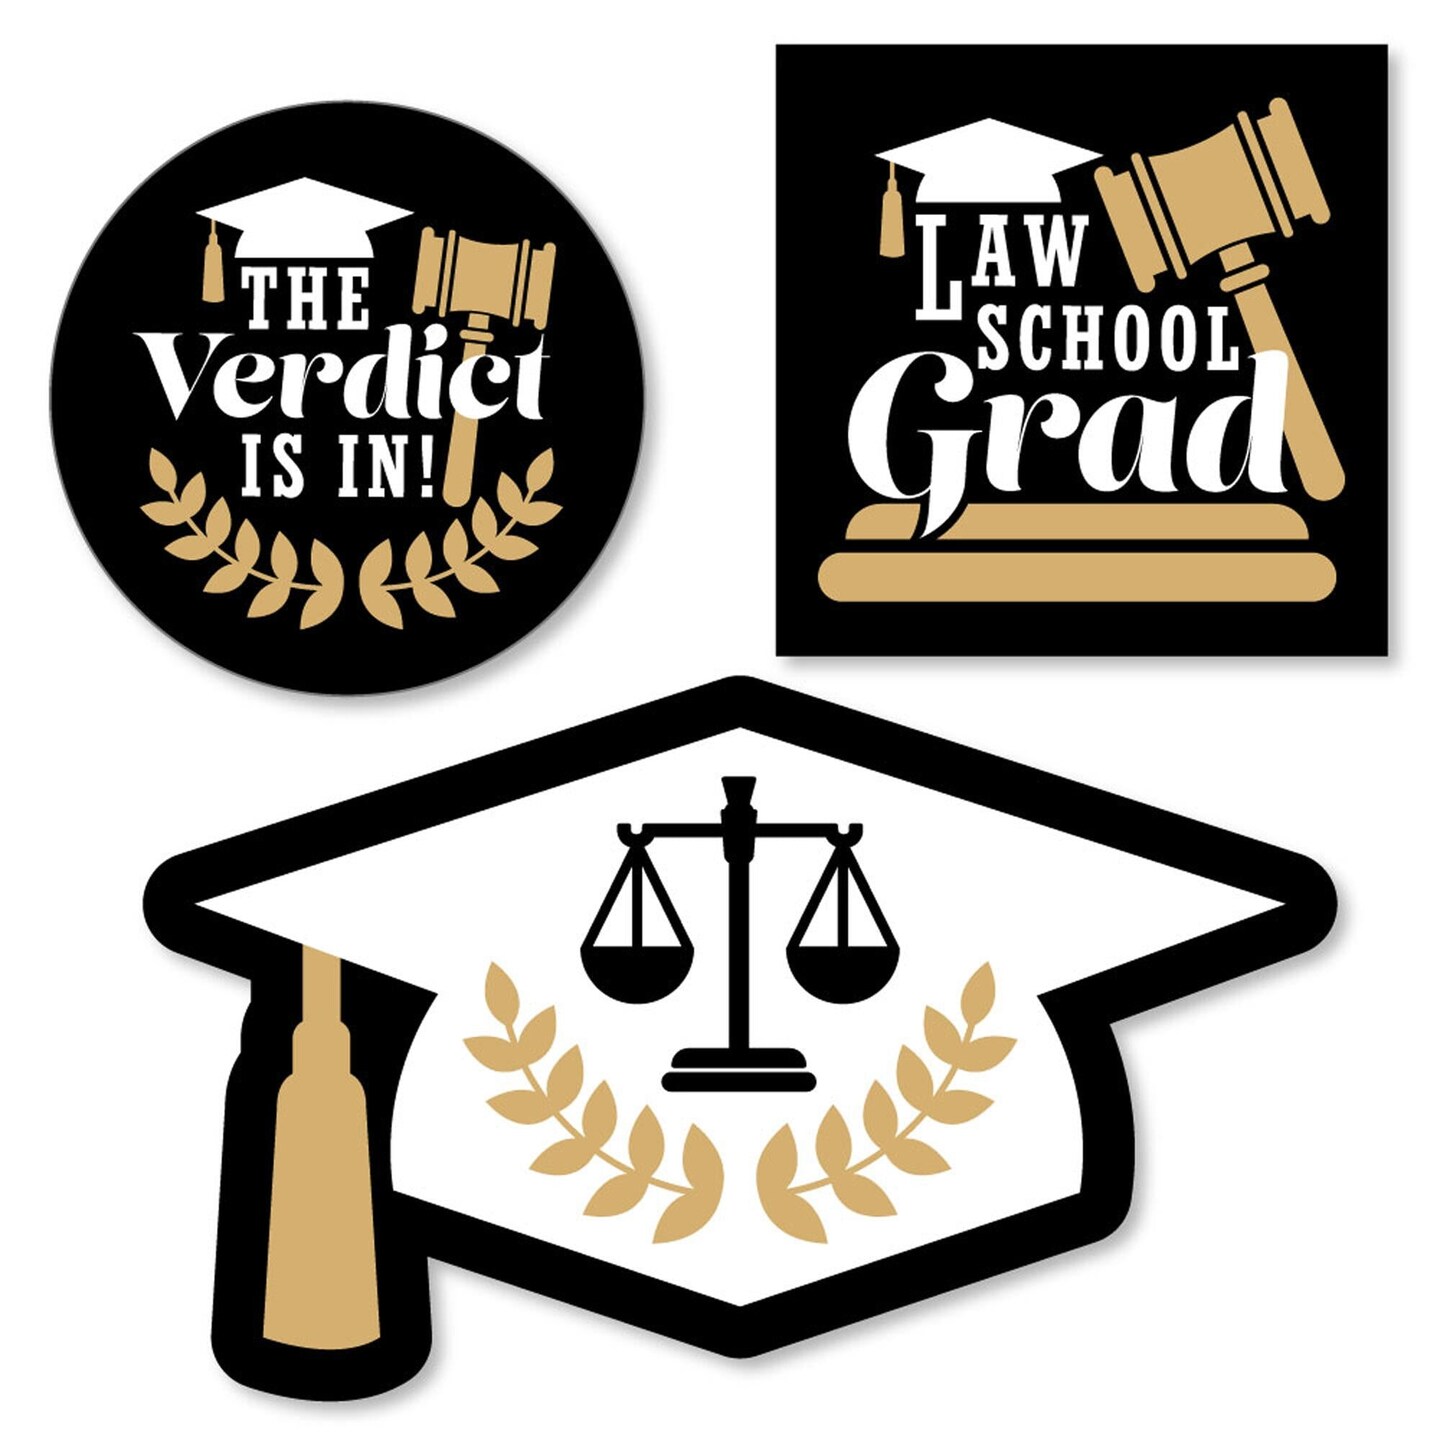 law school graduation party ideas